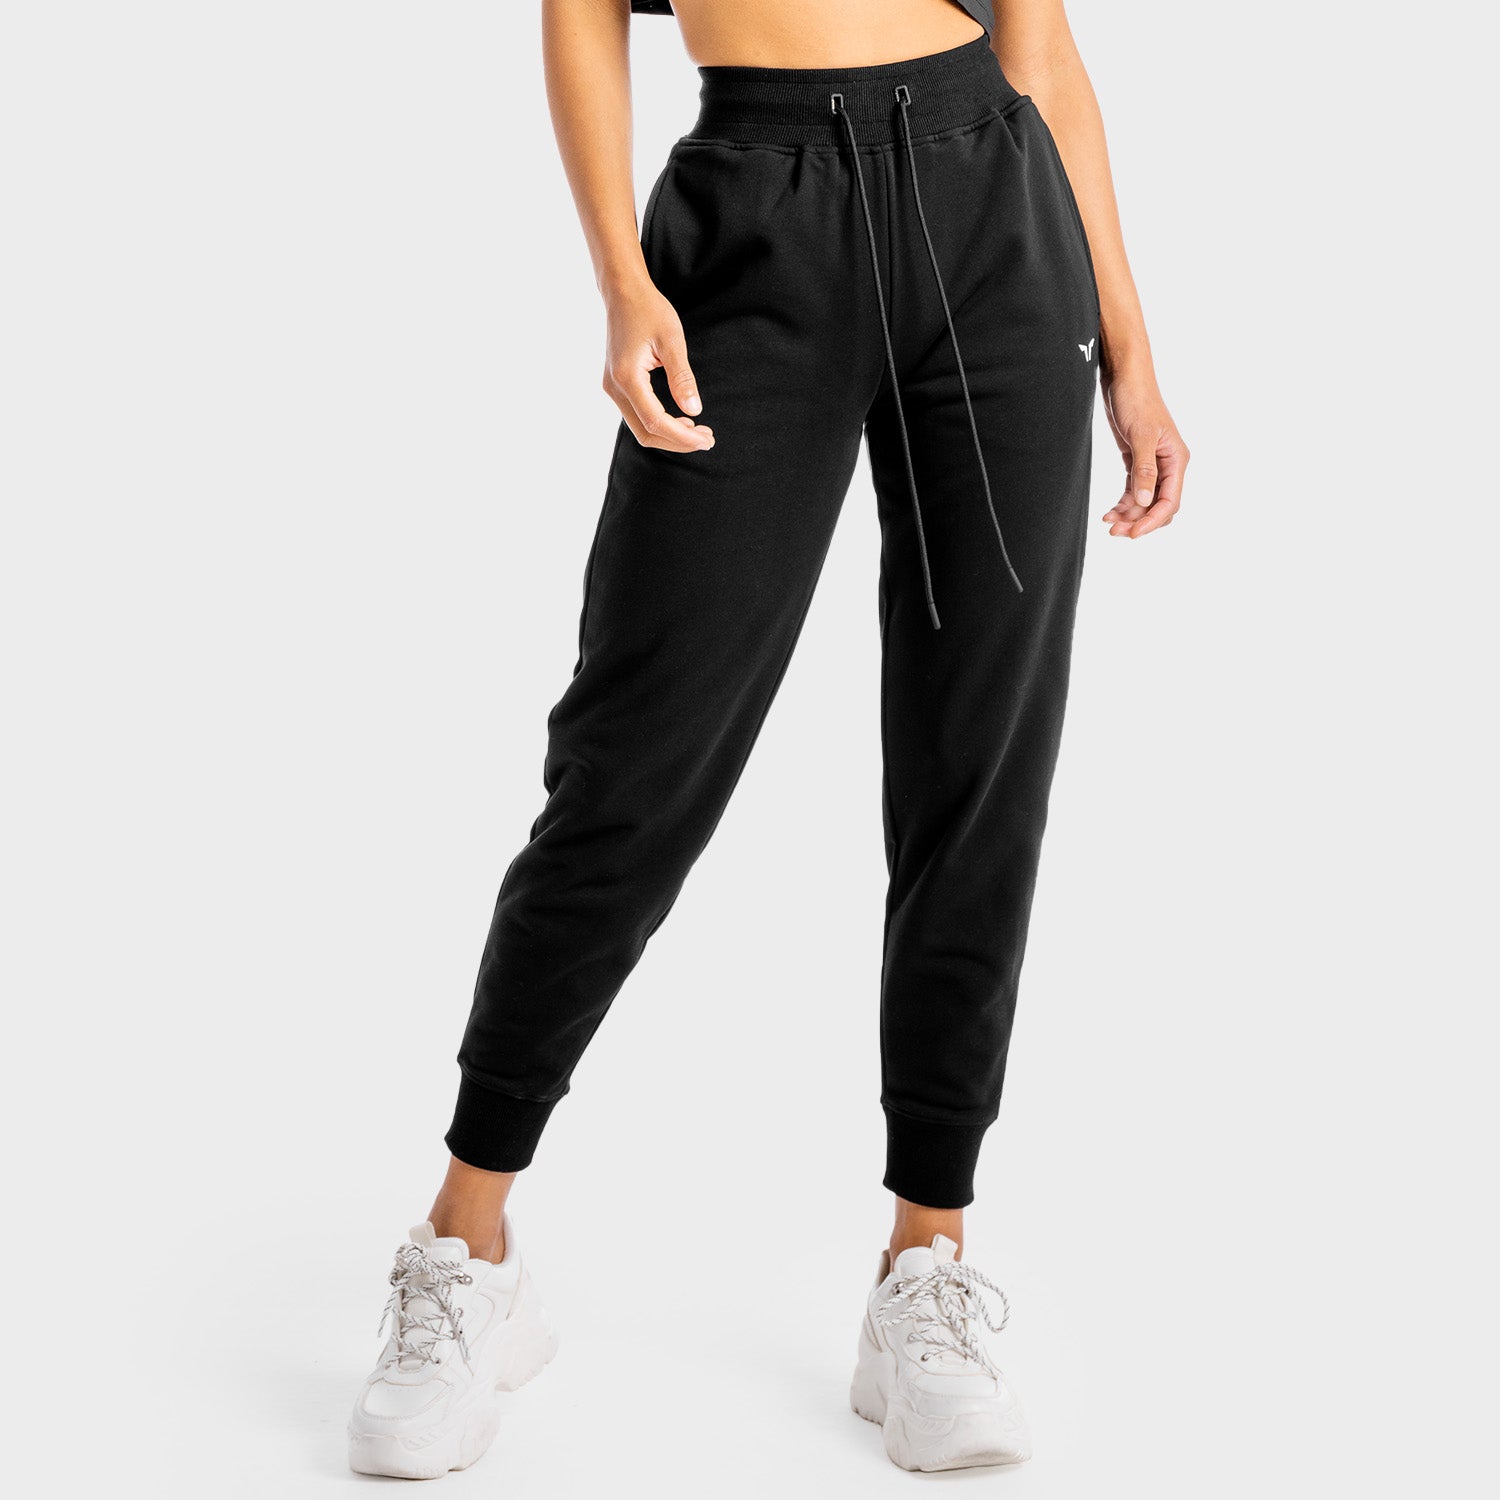 NO, Core Oversize Joggers - Black, Workout Pants Women